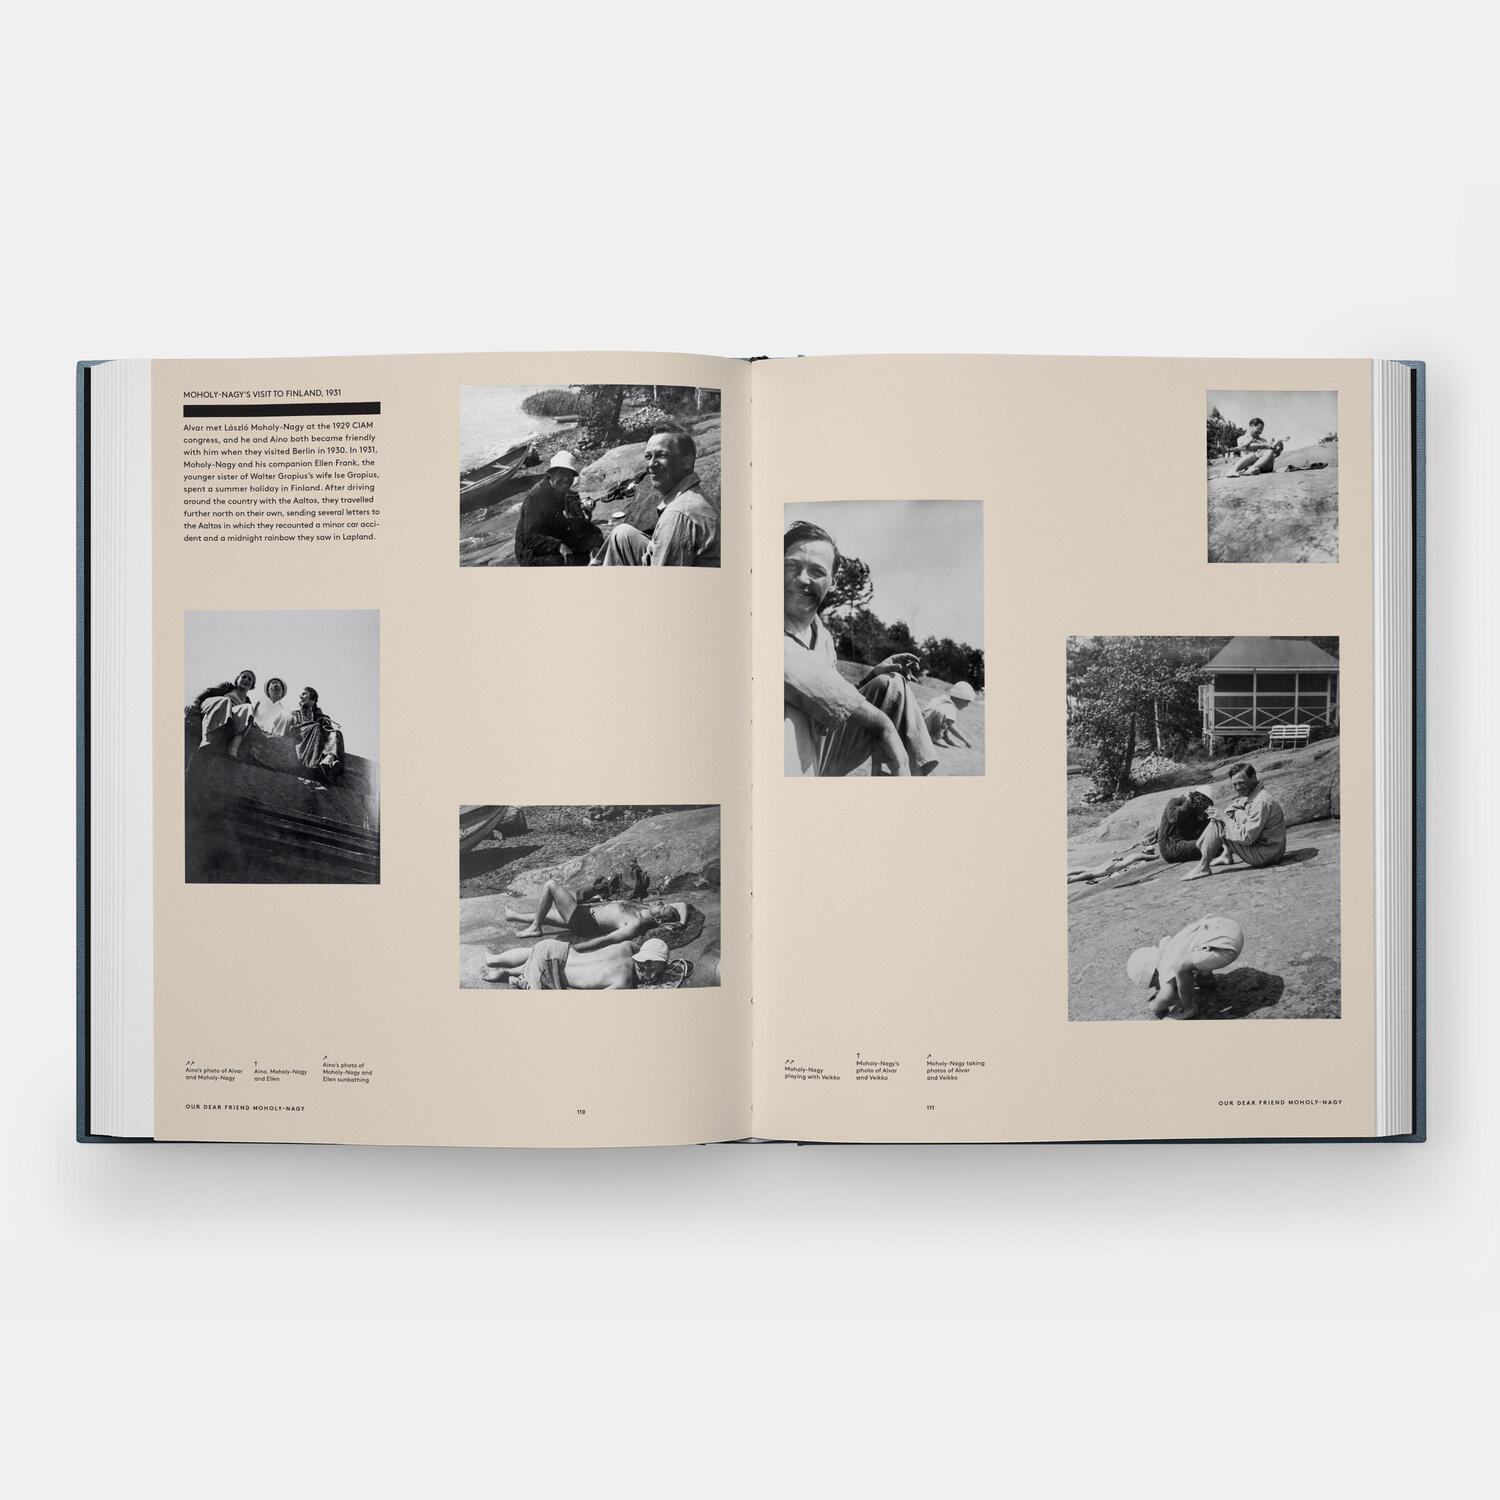 Bild: 9781838666071 | Aino + Alvar Aalto | A Life Together | Heikki Aalto-Alanen | Buch